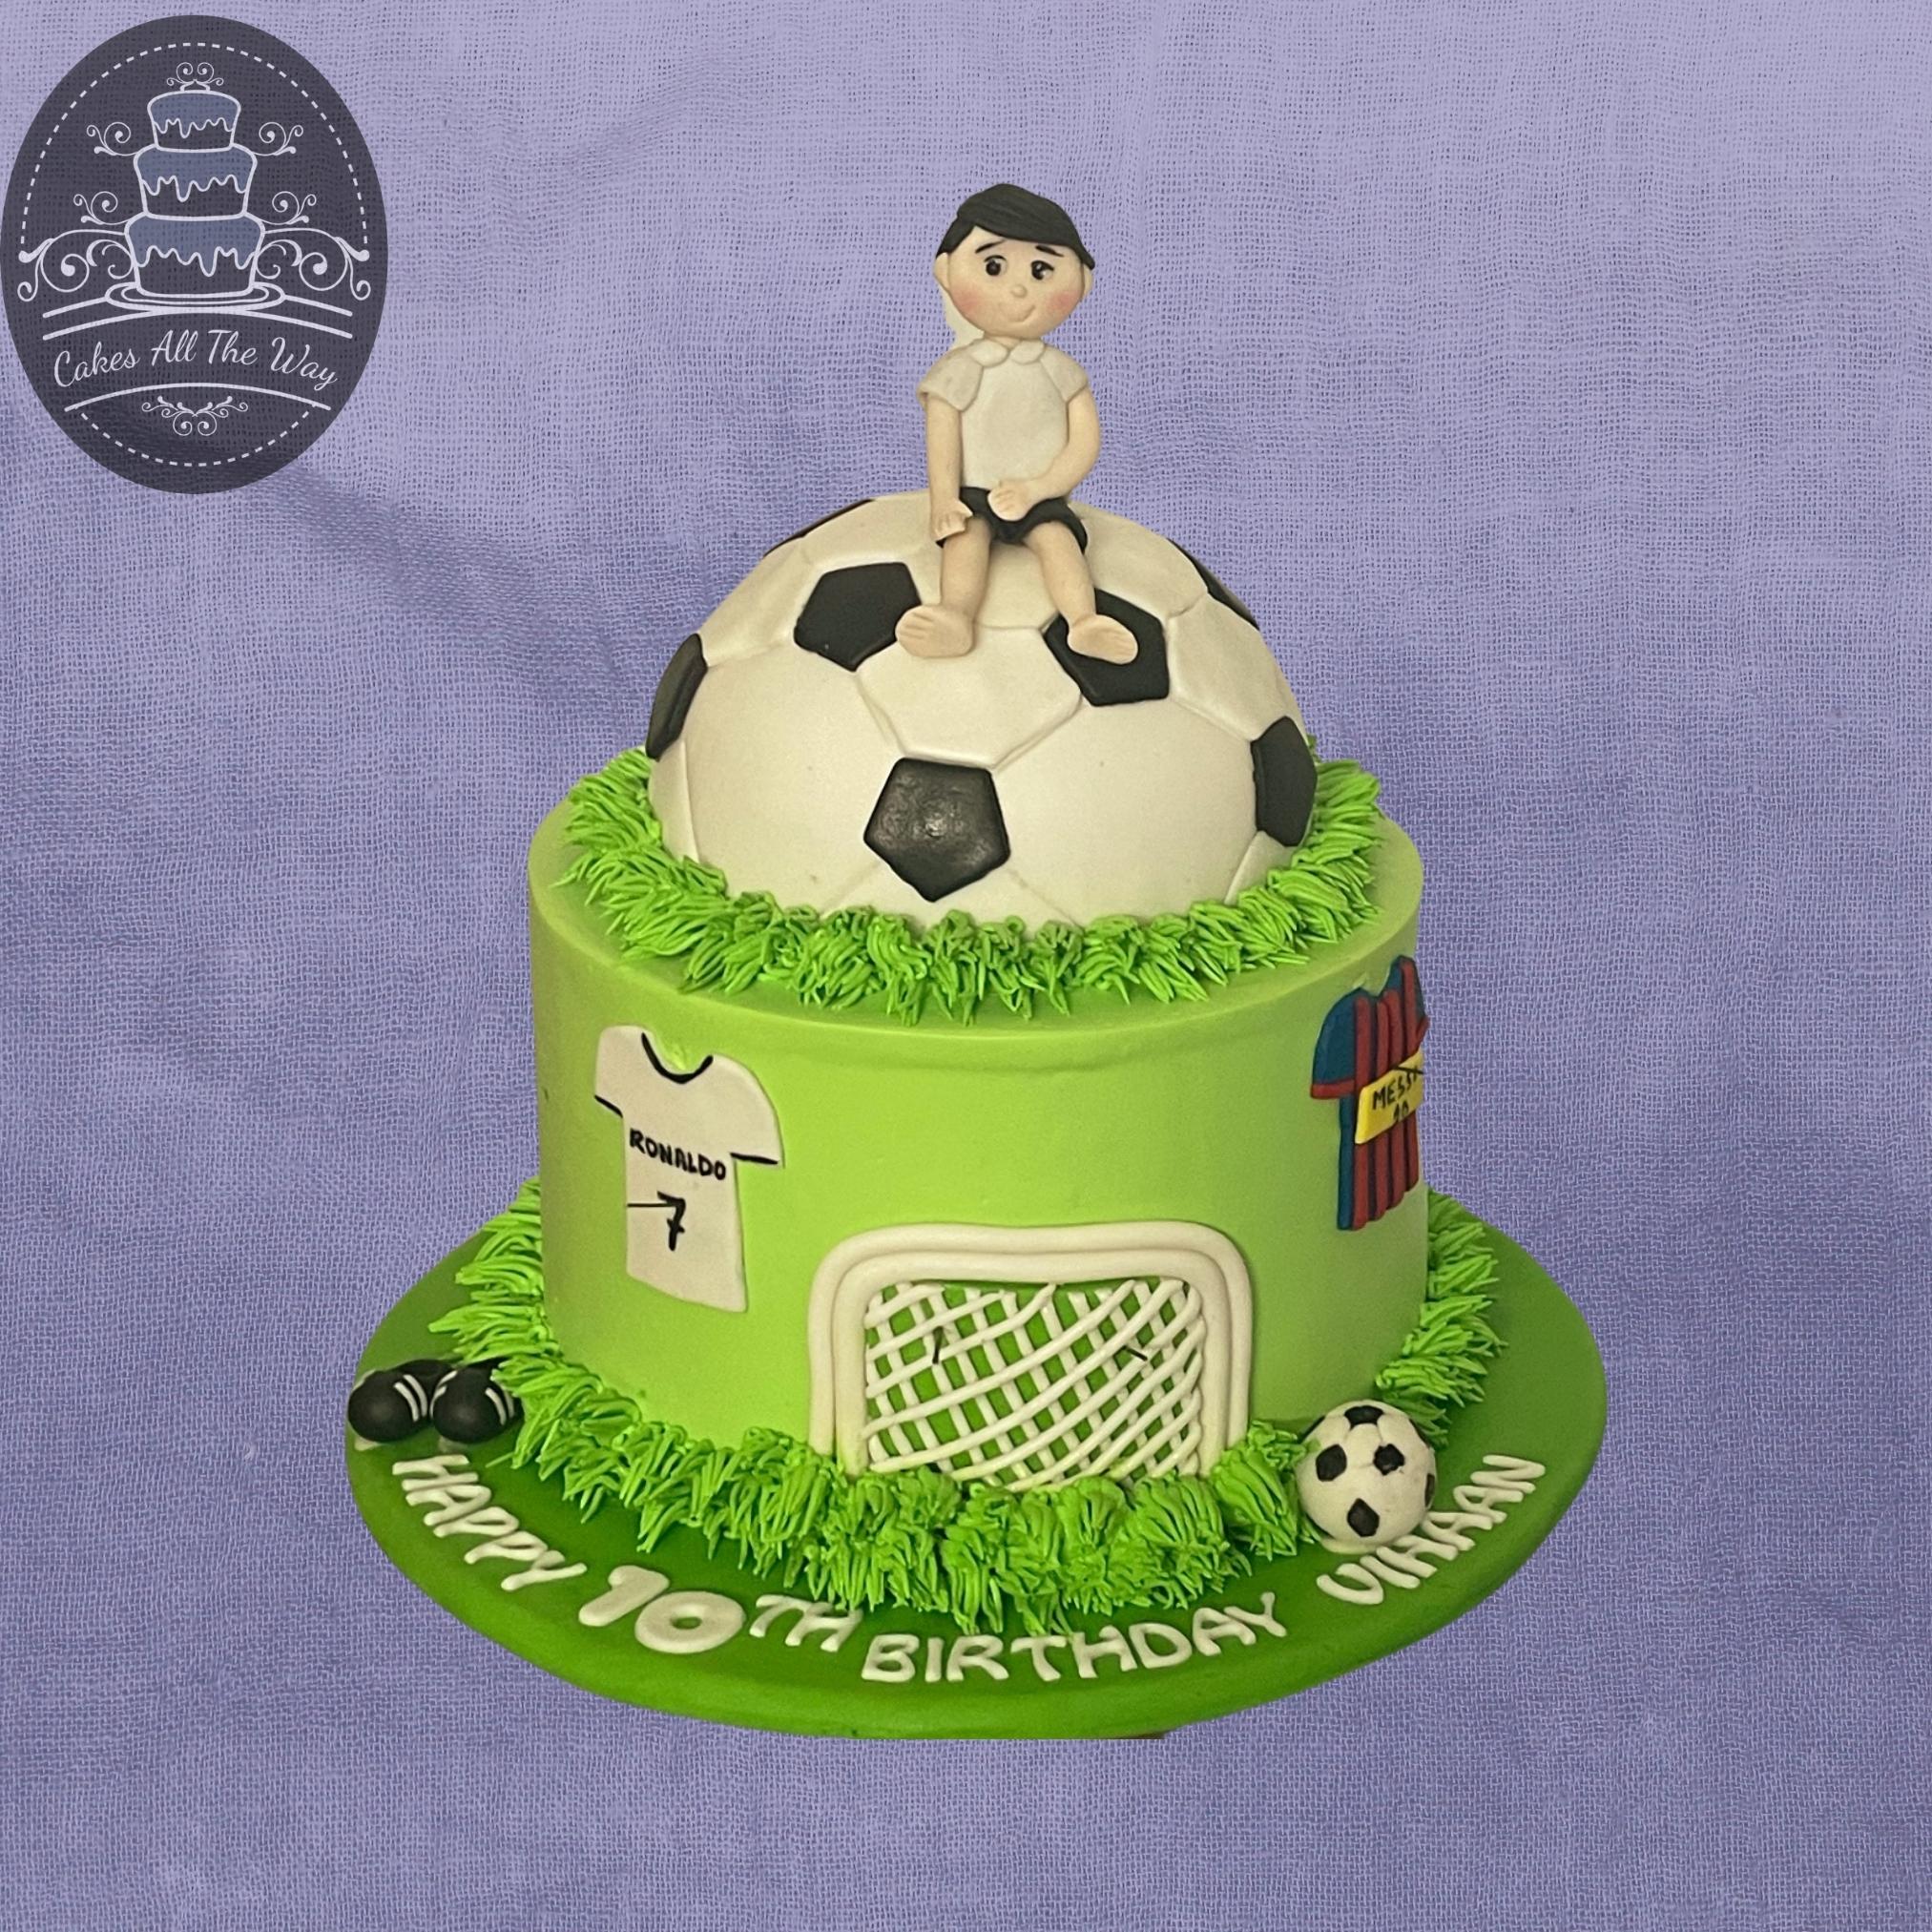 Football Sunday Cake – Sweetened Memories Bakery